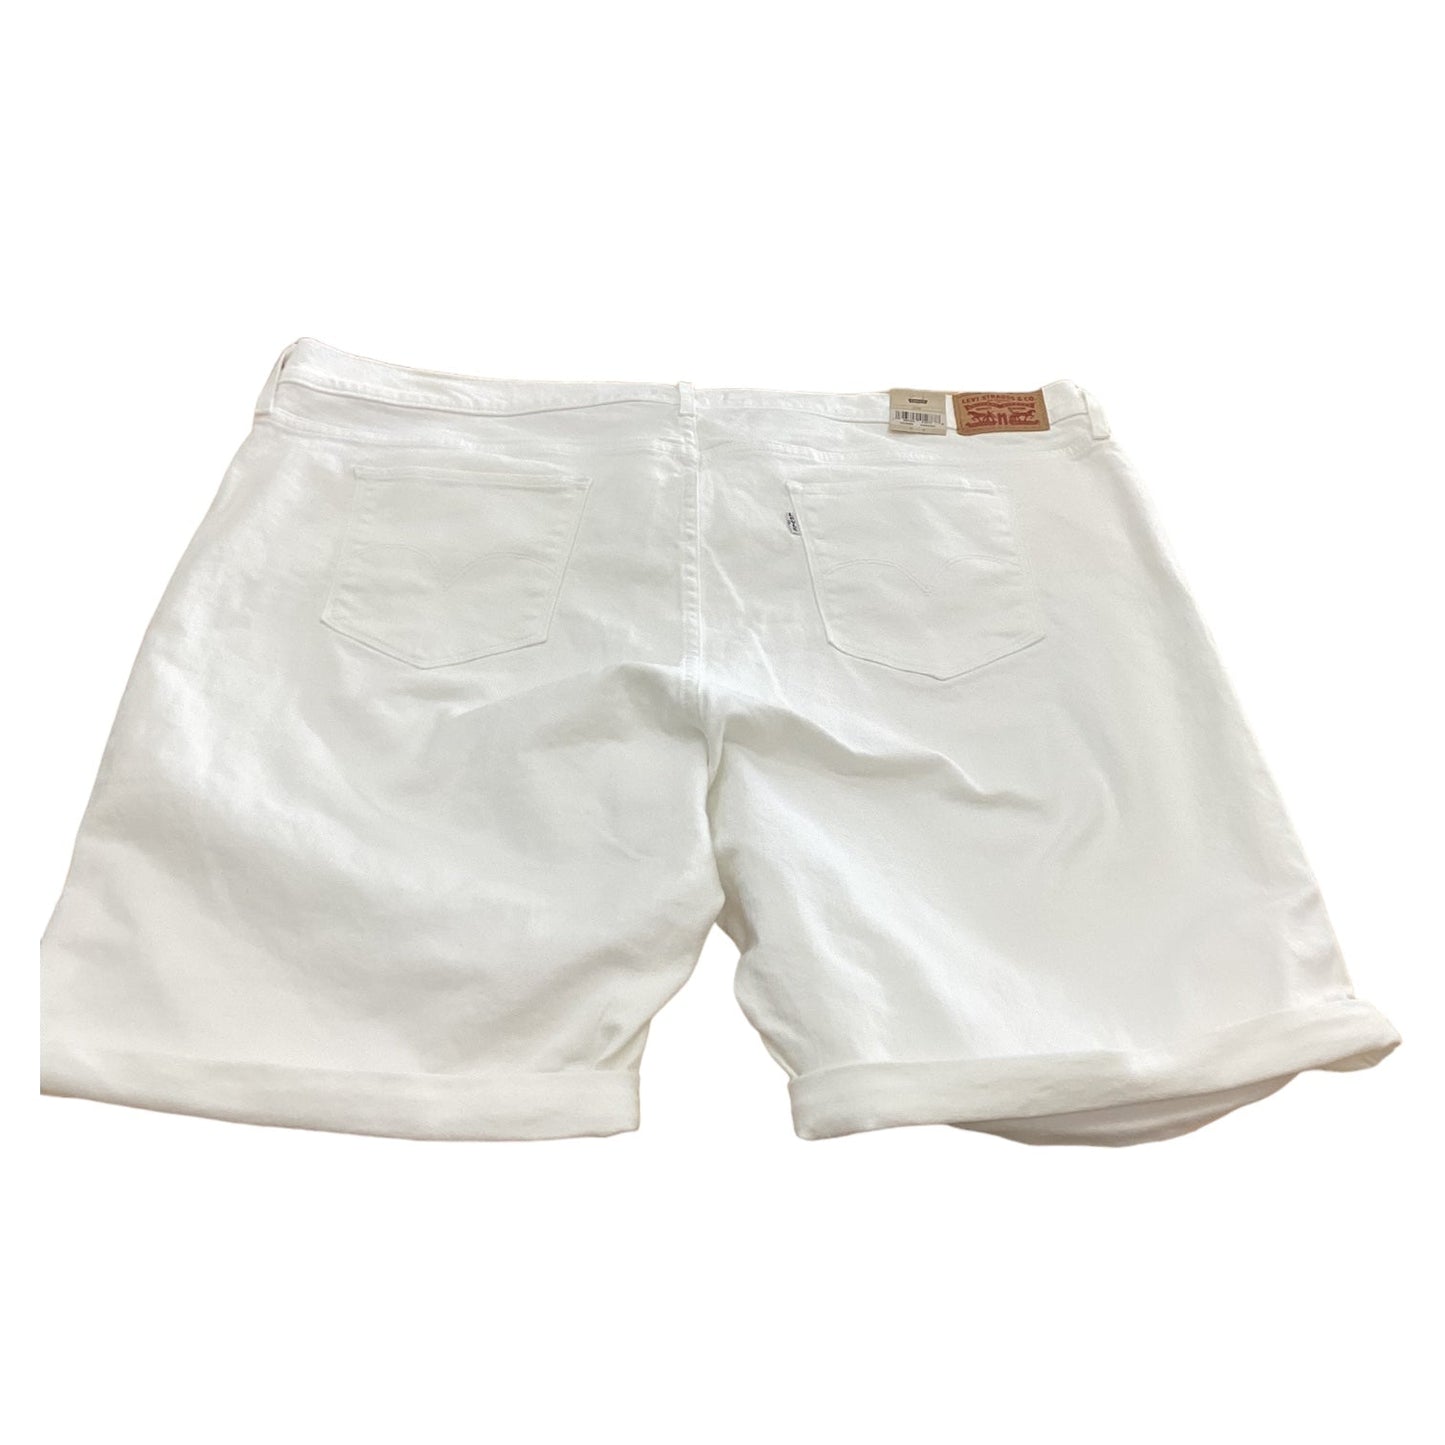 White Shorts Levis, Size 24